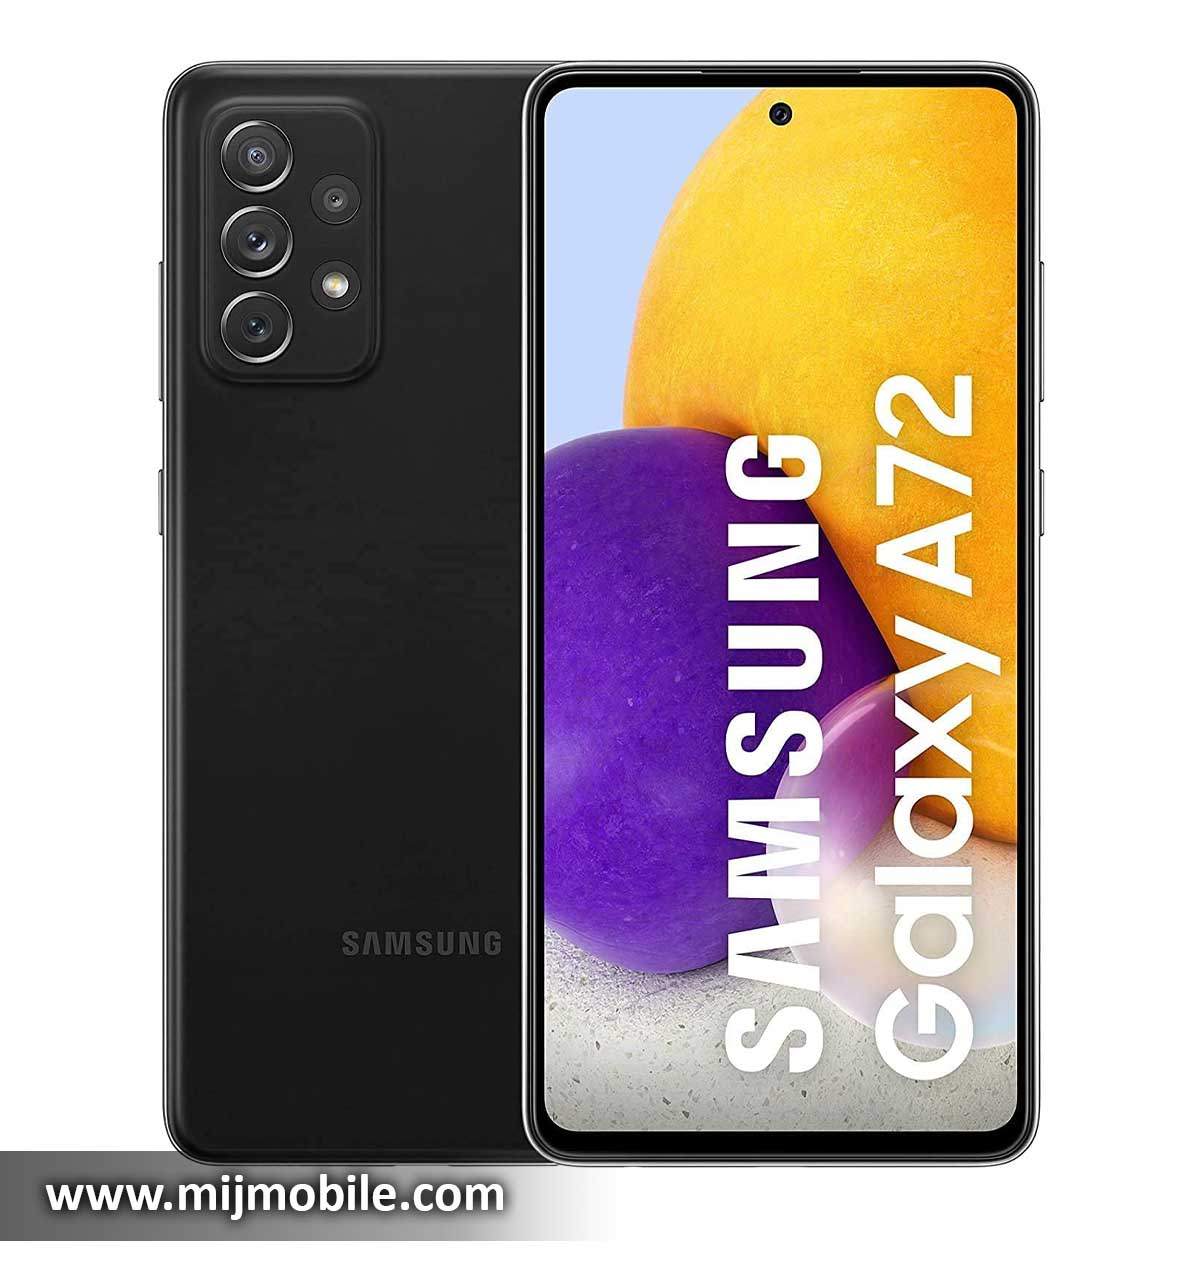 Samsung Galaxy A72 Price in Pakistan & Specifications Samsung Galaxy A72 Price in Pakistan is only 82,999.